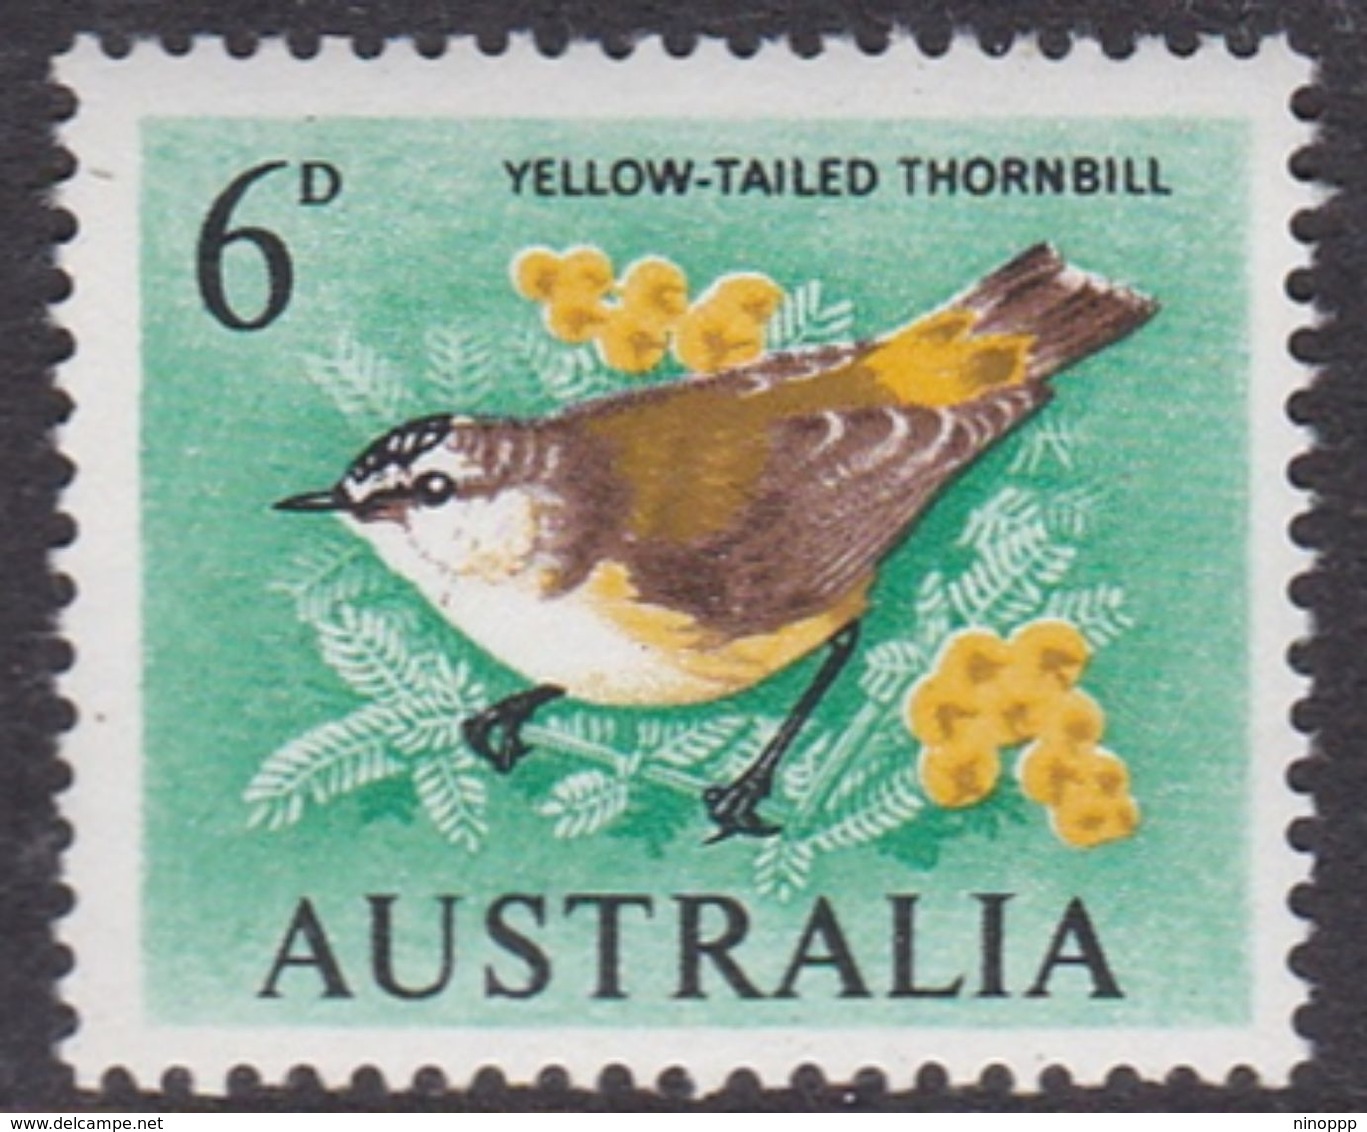 Australia ASC 396 1964 Birds 6d Thorbill, Helecon Paper, Mint Never Hinged - Proofs & Reprints